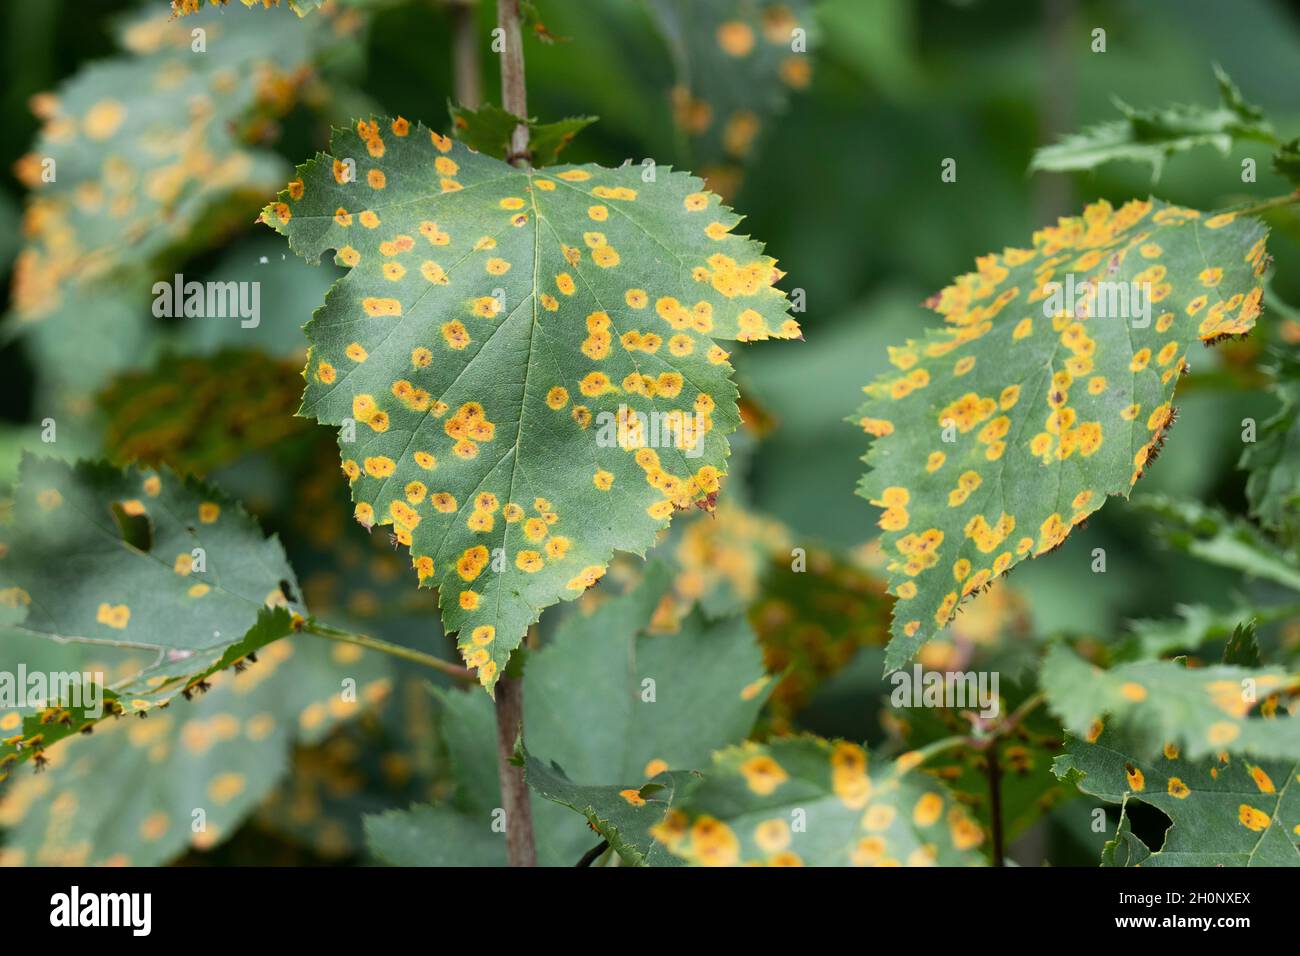 Hawthorn Rust Disease, Leaves infected with Rust Fungus (Gymnosporangium globosum) Stock Photo